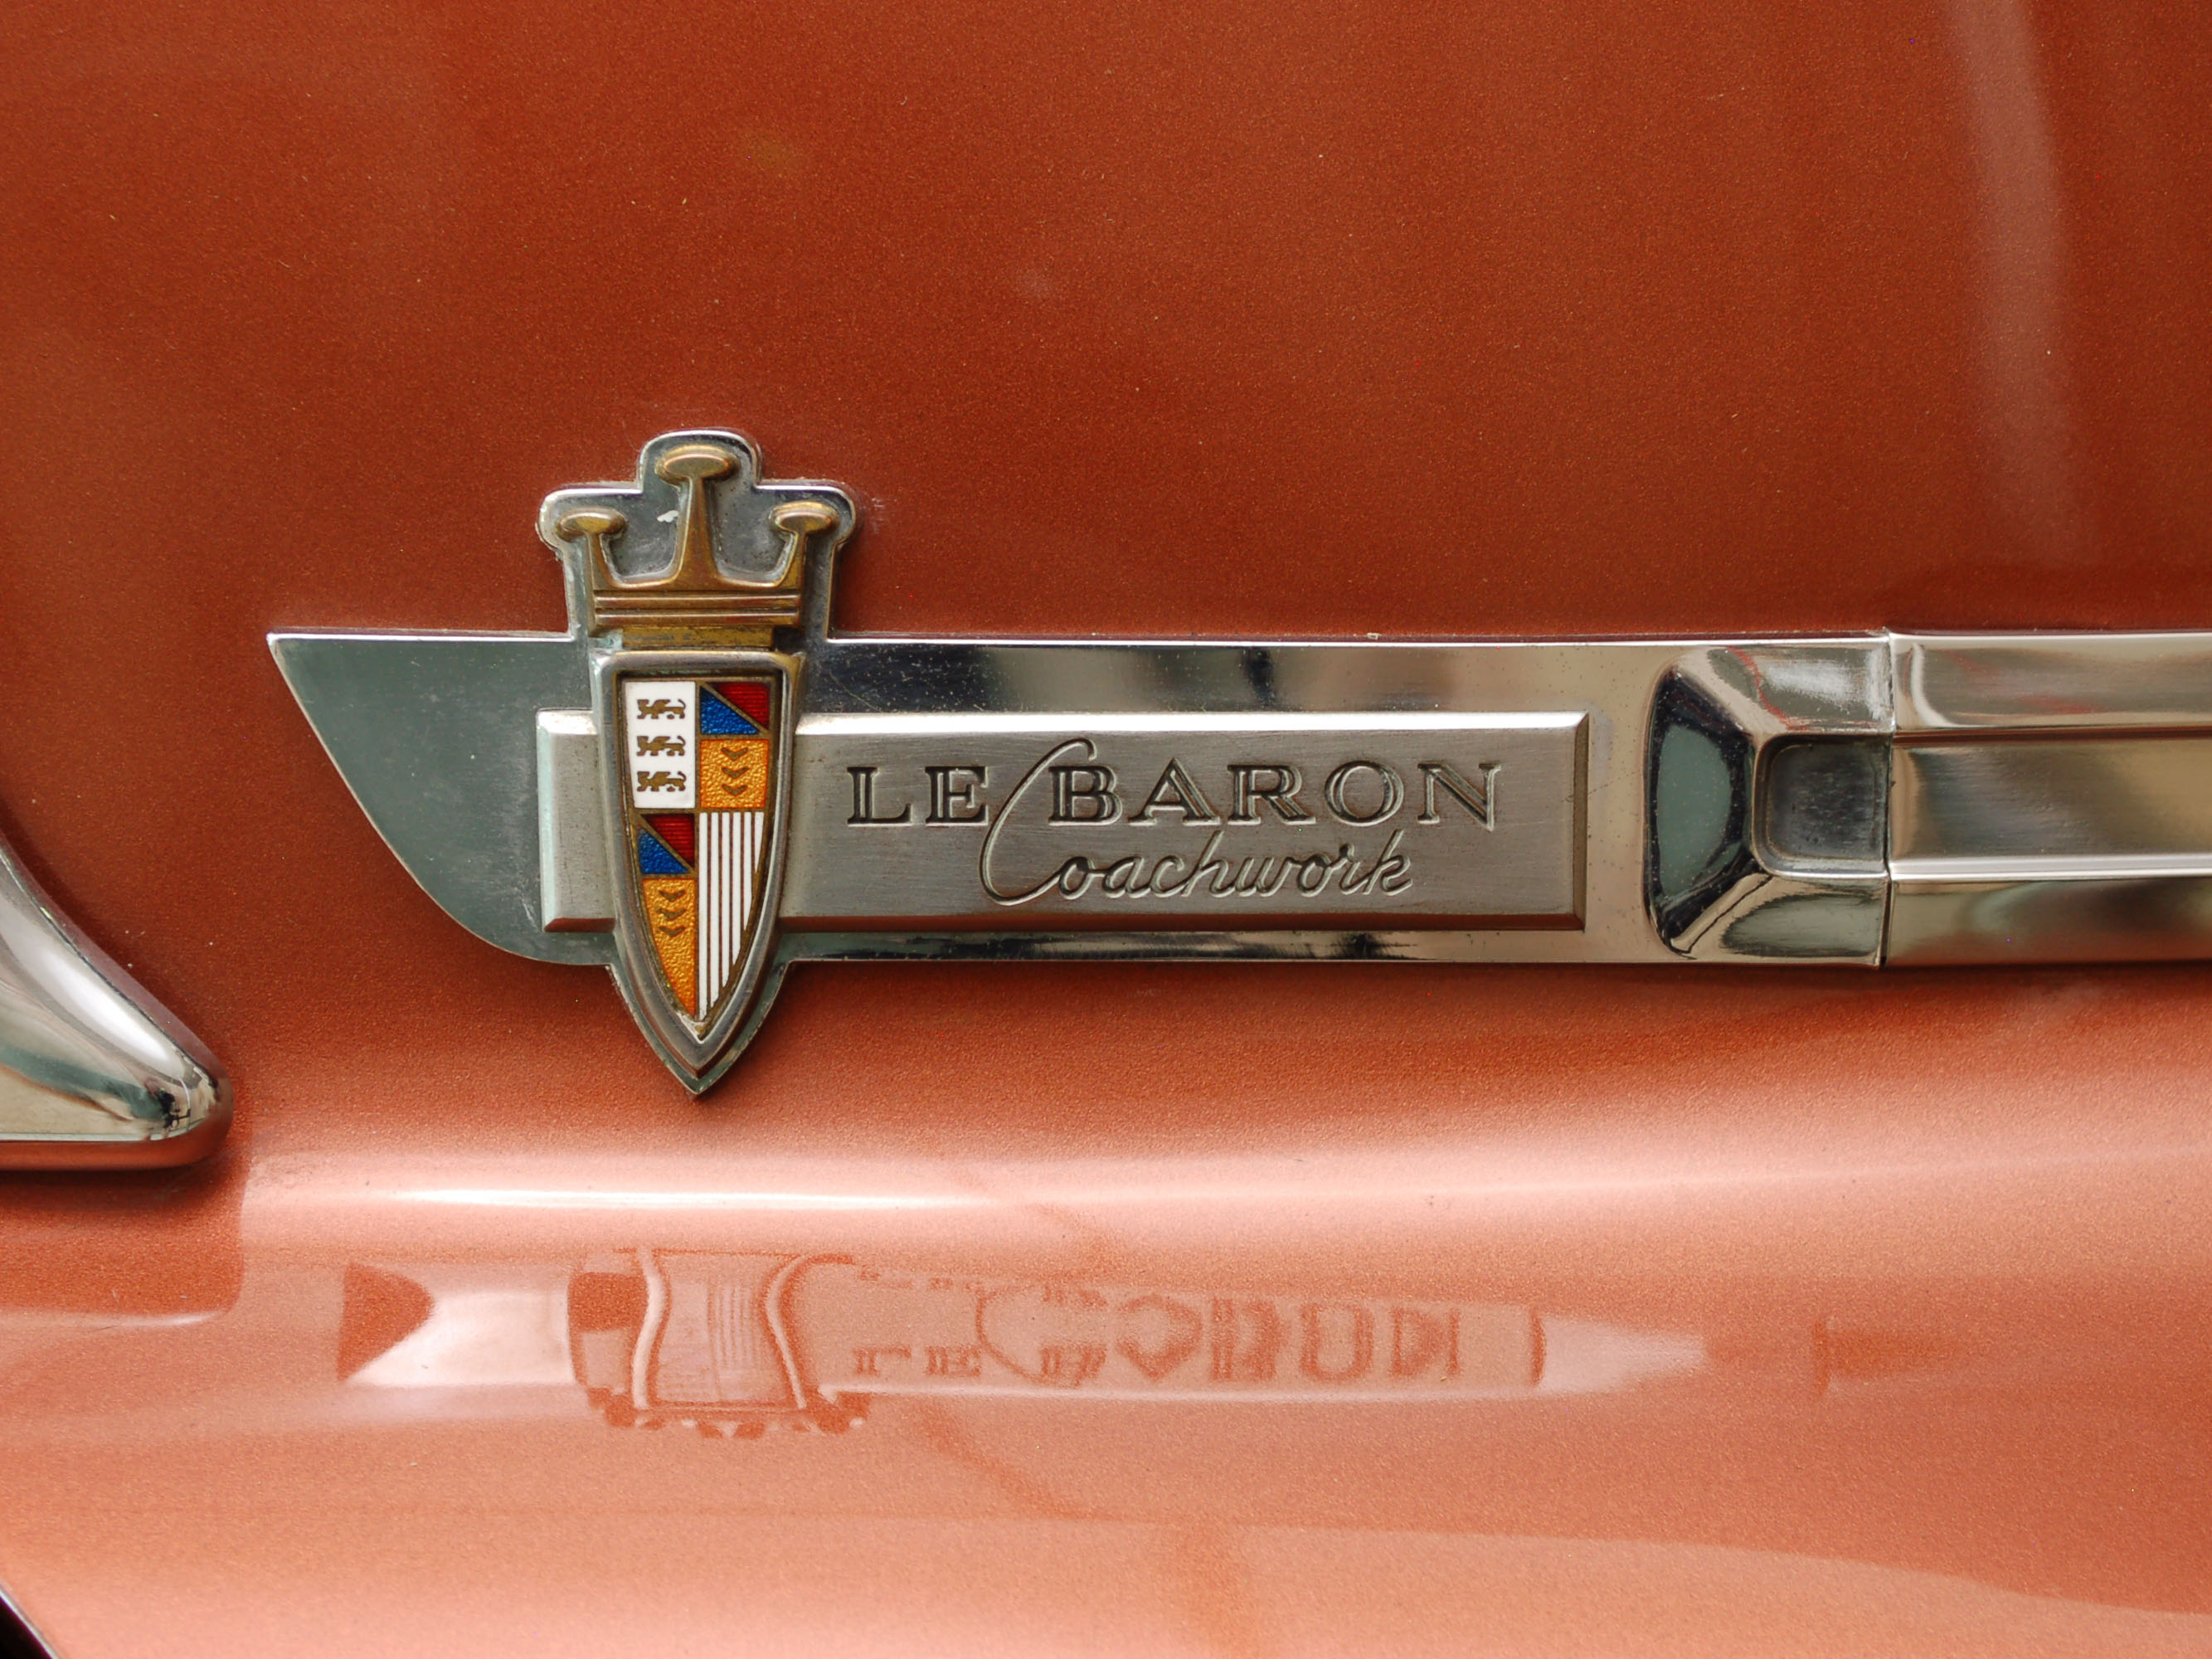 1963 imperial custom southampton